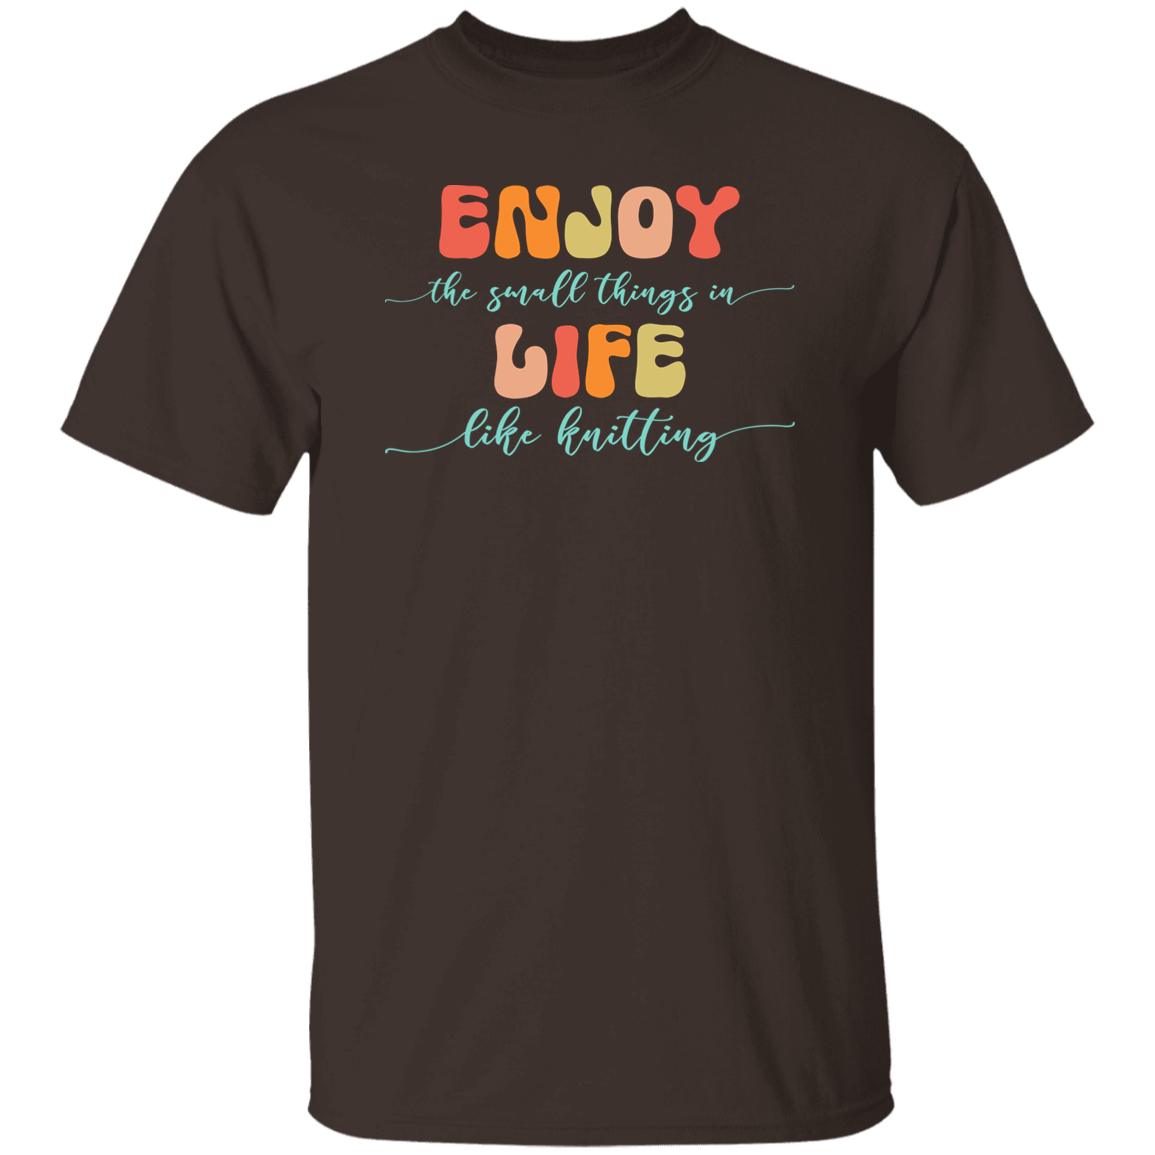 Enjoy Life - Knitting T-Shirt